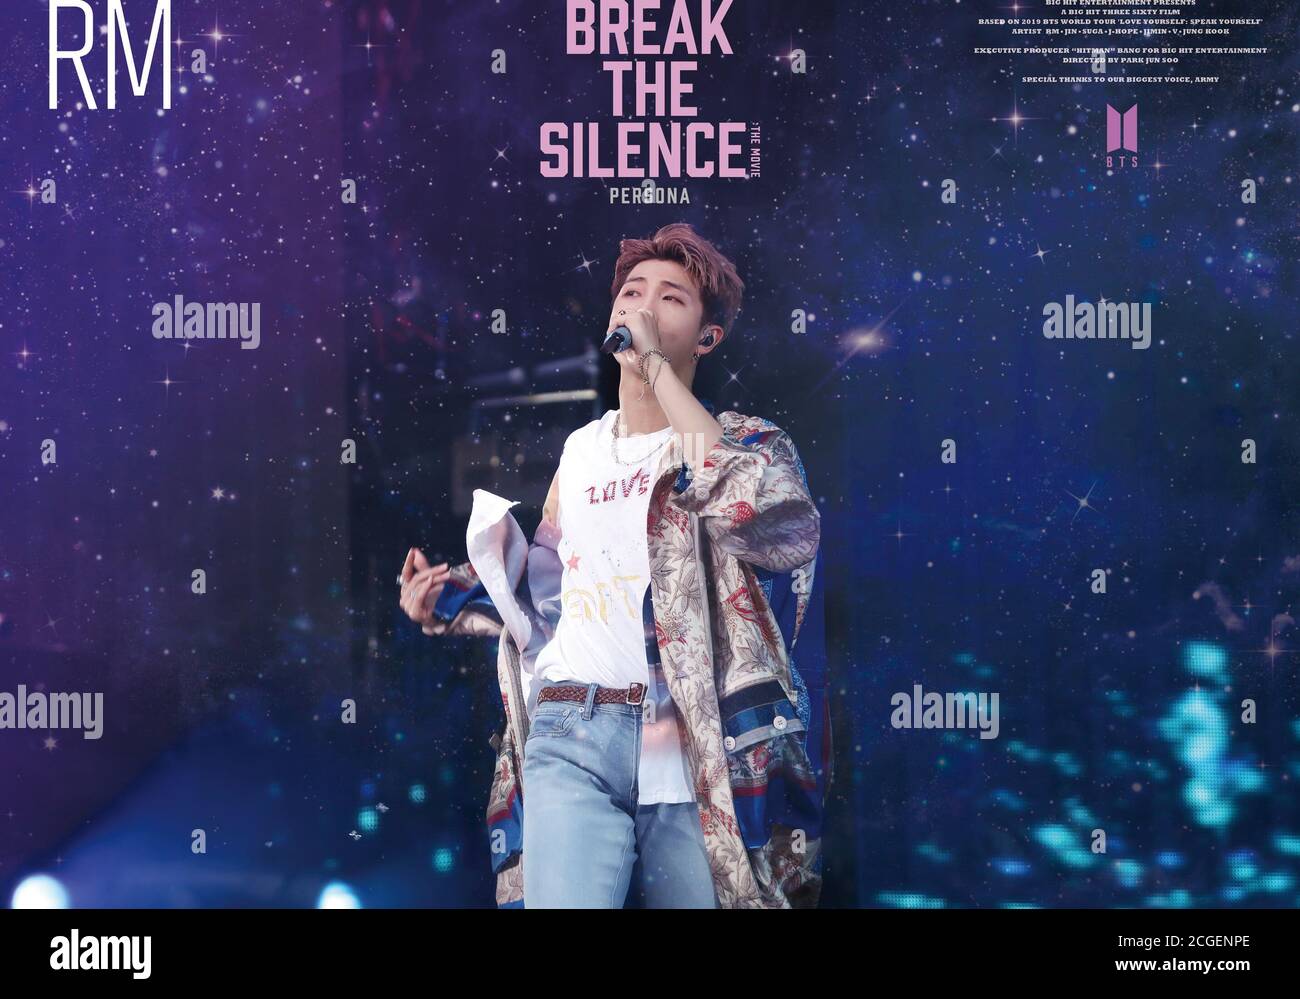 RELEASE DATE: September 24, 2020 TITLE: Break The Silence: The Movie  STUDIO: Persona DIRECTOR: Jun-Soo Park PLOT: K-pop sensation BTS embark on  their 2019 'Love Yourself: Speak Yourself' Tour. STARRING: RM of